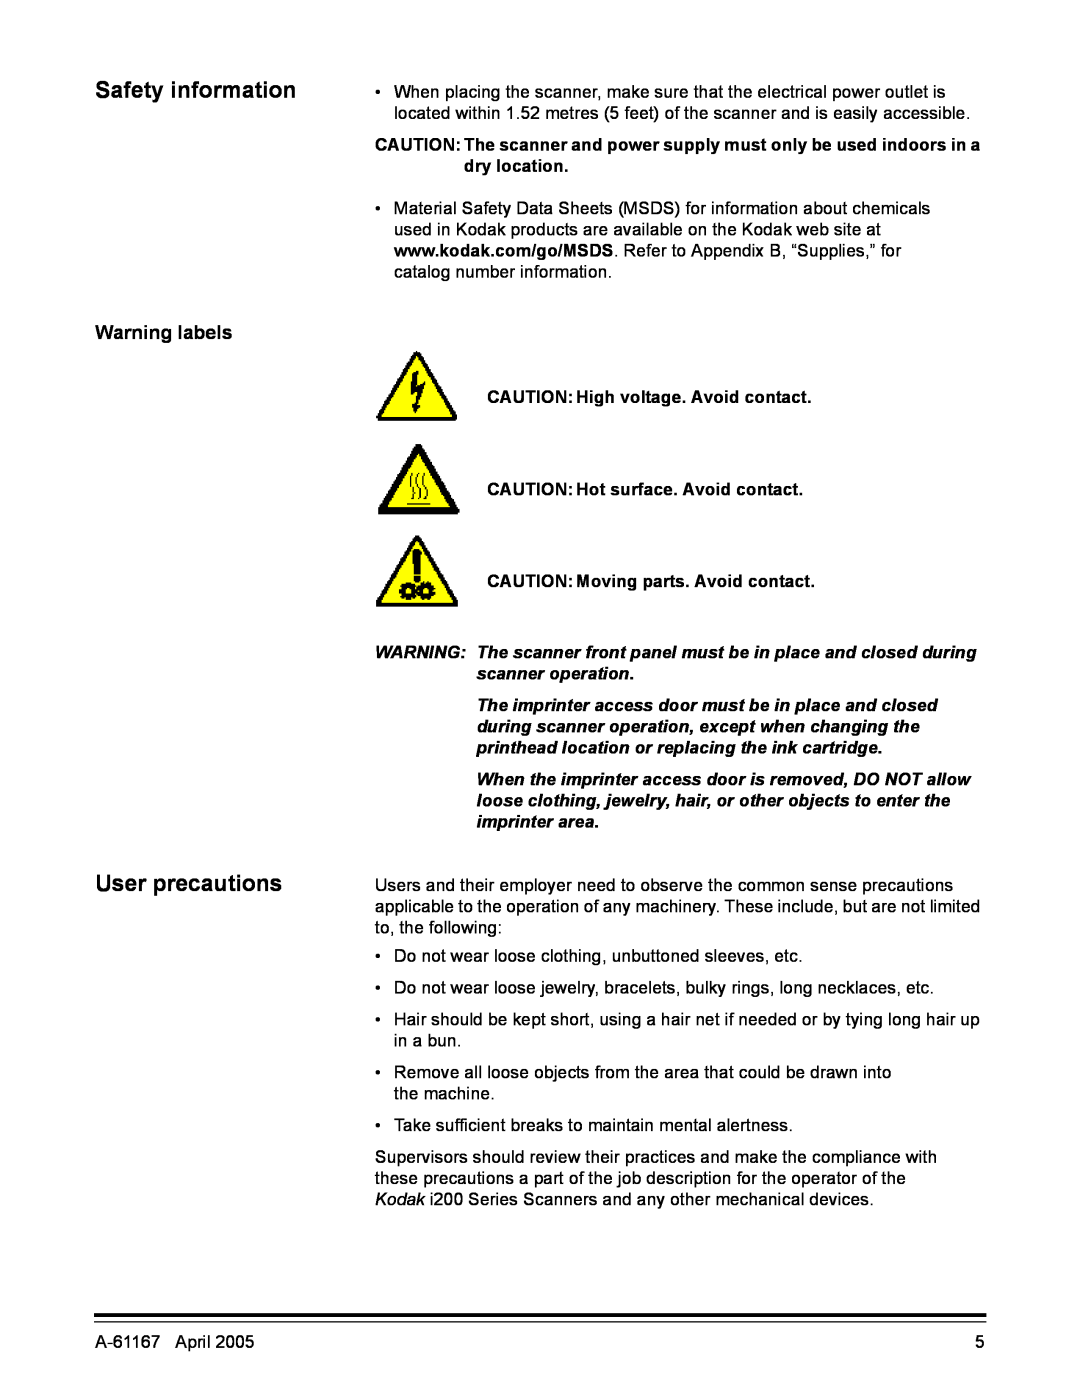 Kodak A-61167 manual Safety information, User precautions, Warning labels 